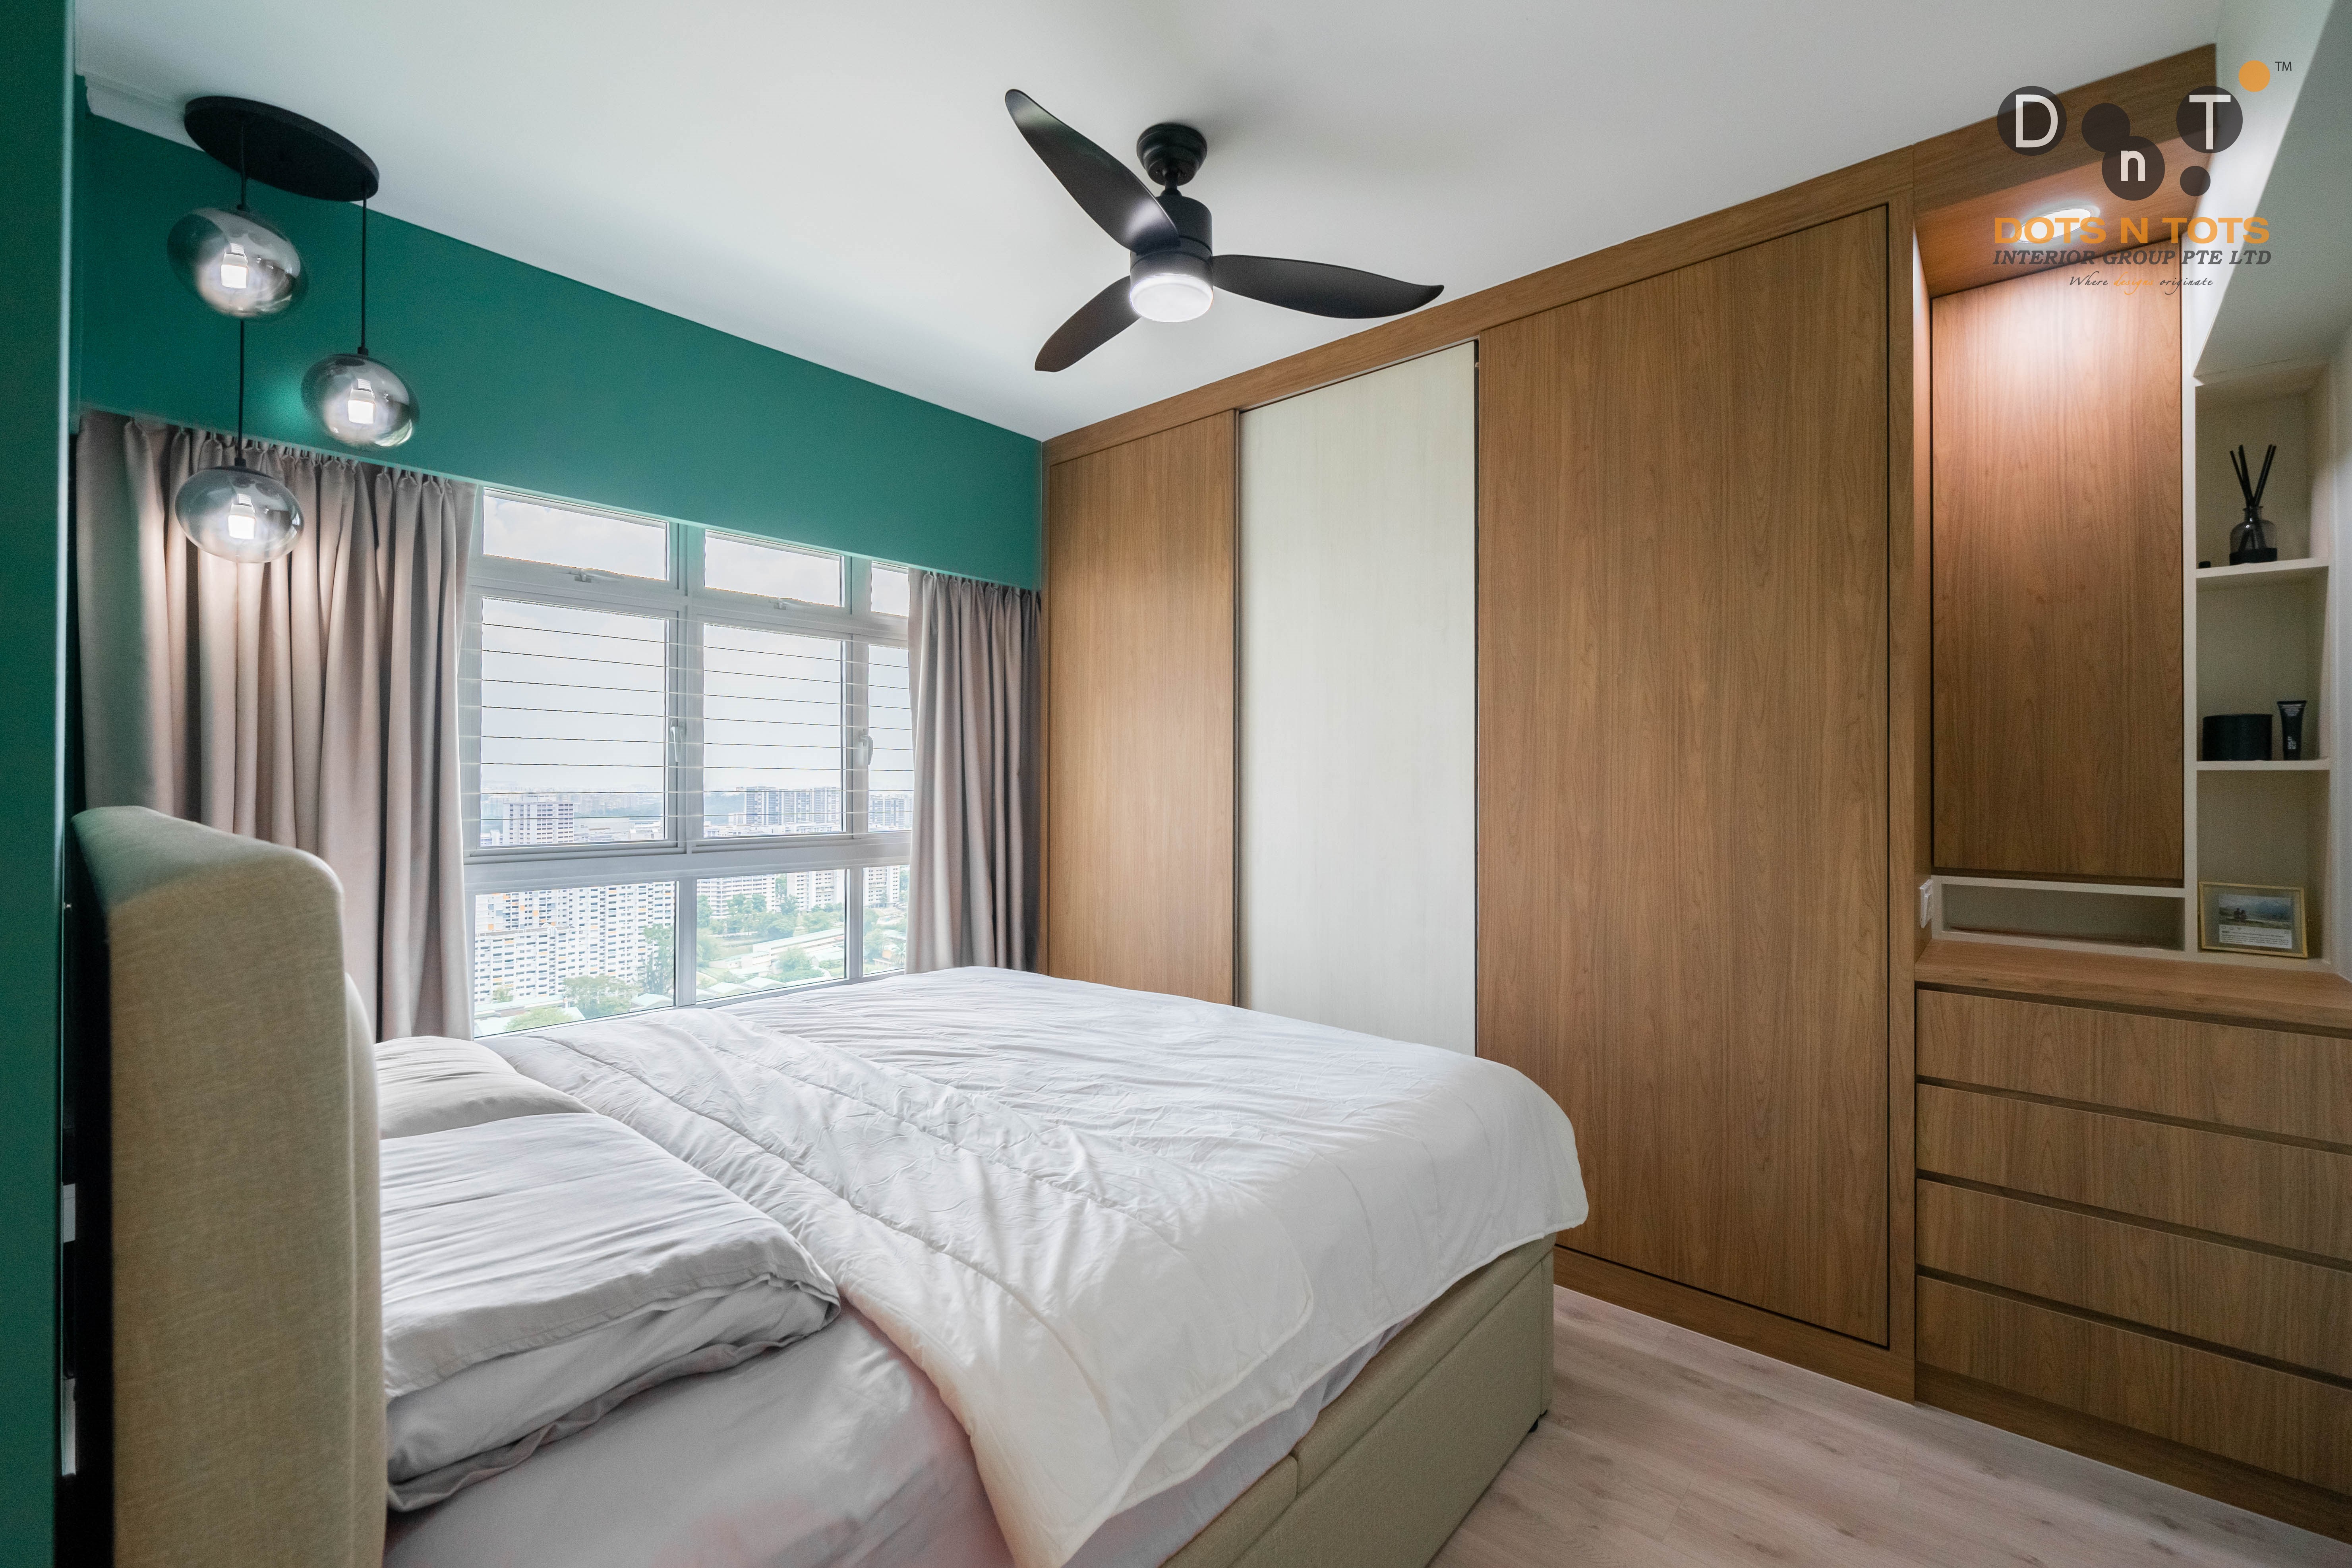 Scandinavian Design - Bedroom - HDB 4 Room - Design by Dots n Tots Interior Pte Ltd